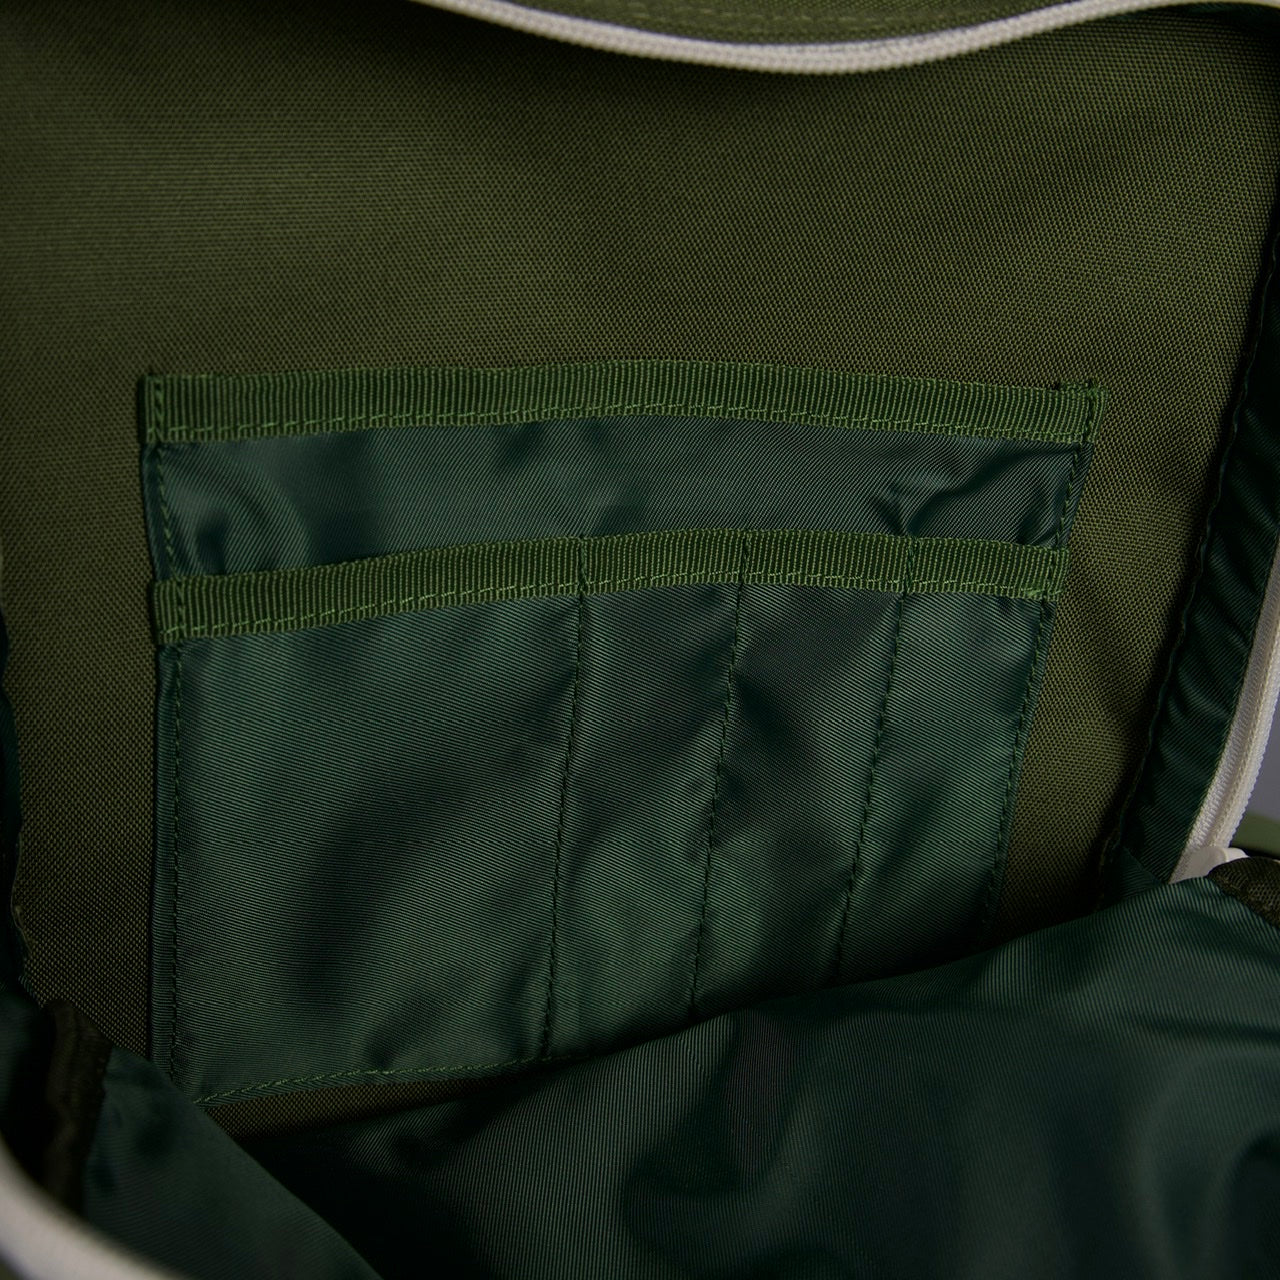 45L Backpack Moss Green